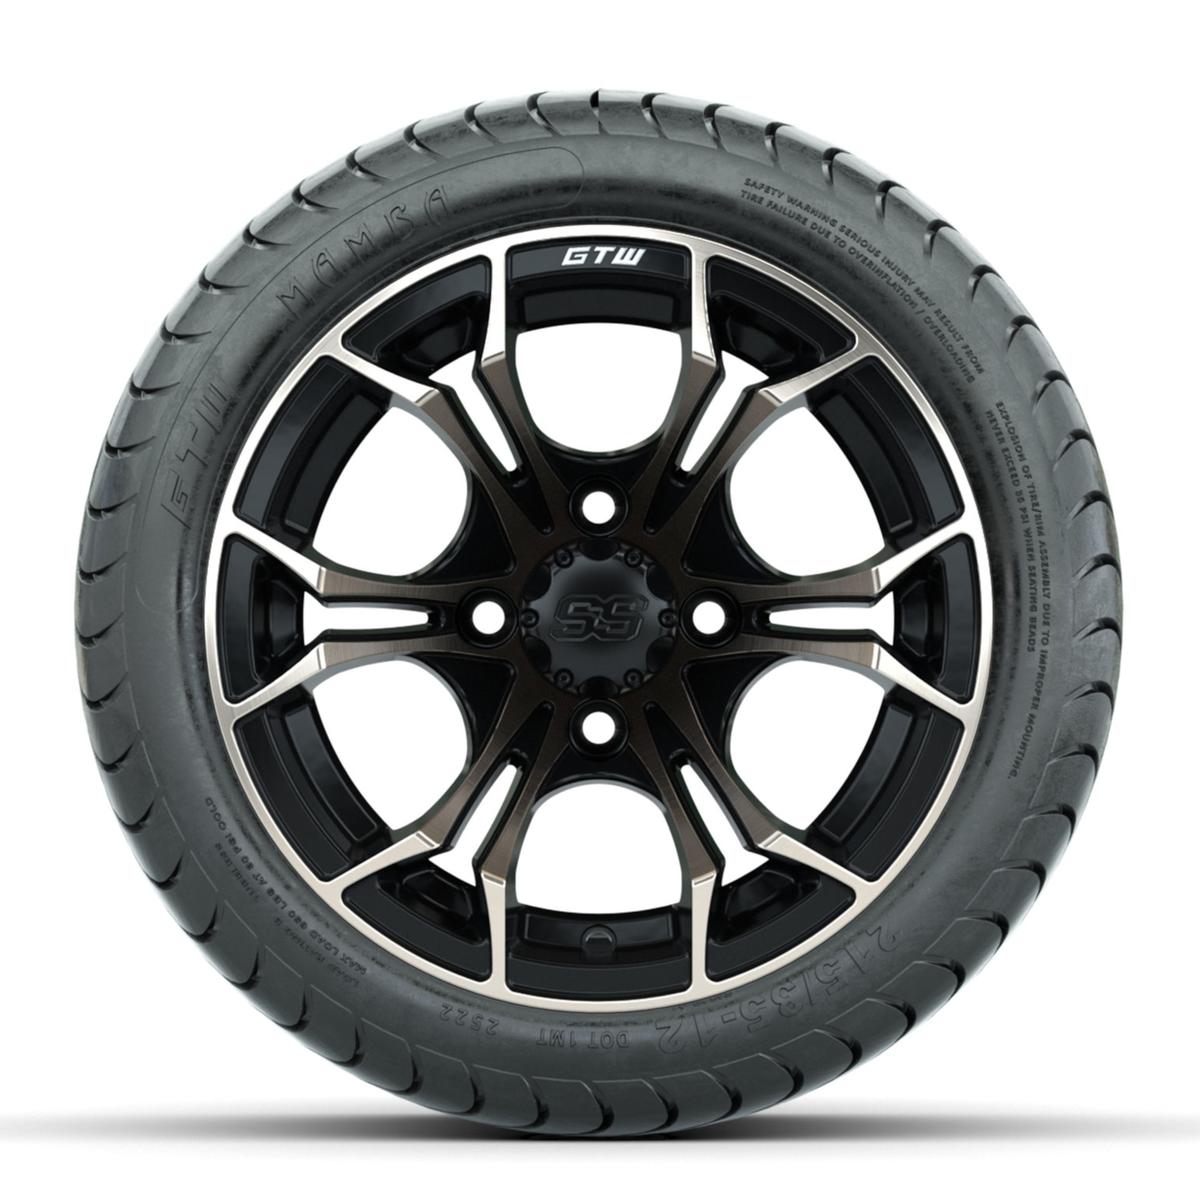 GTW Spyder Bronze/Matte Black 12 in Wheels with 215/35-12 Mamba Street Tires – Full Set